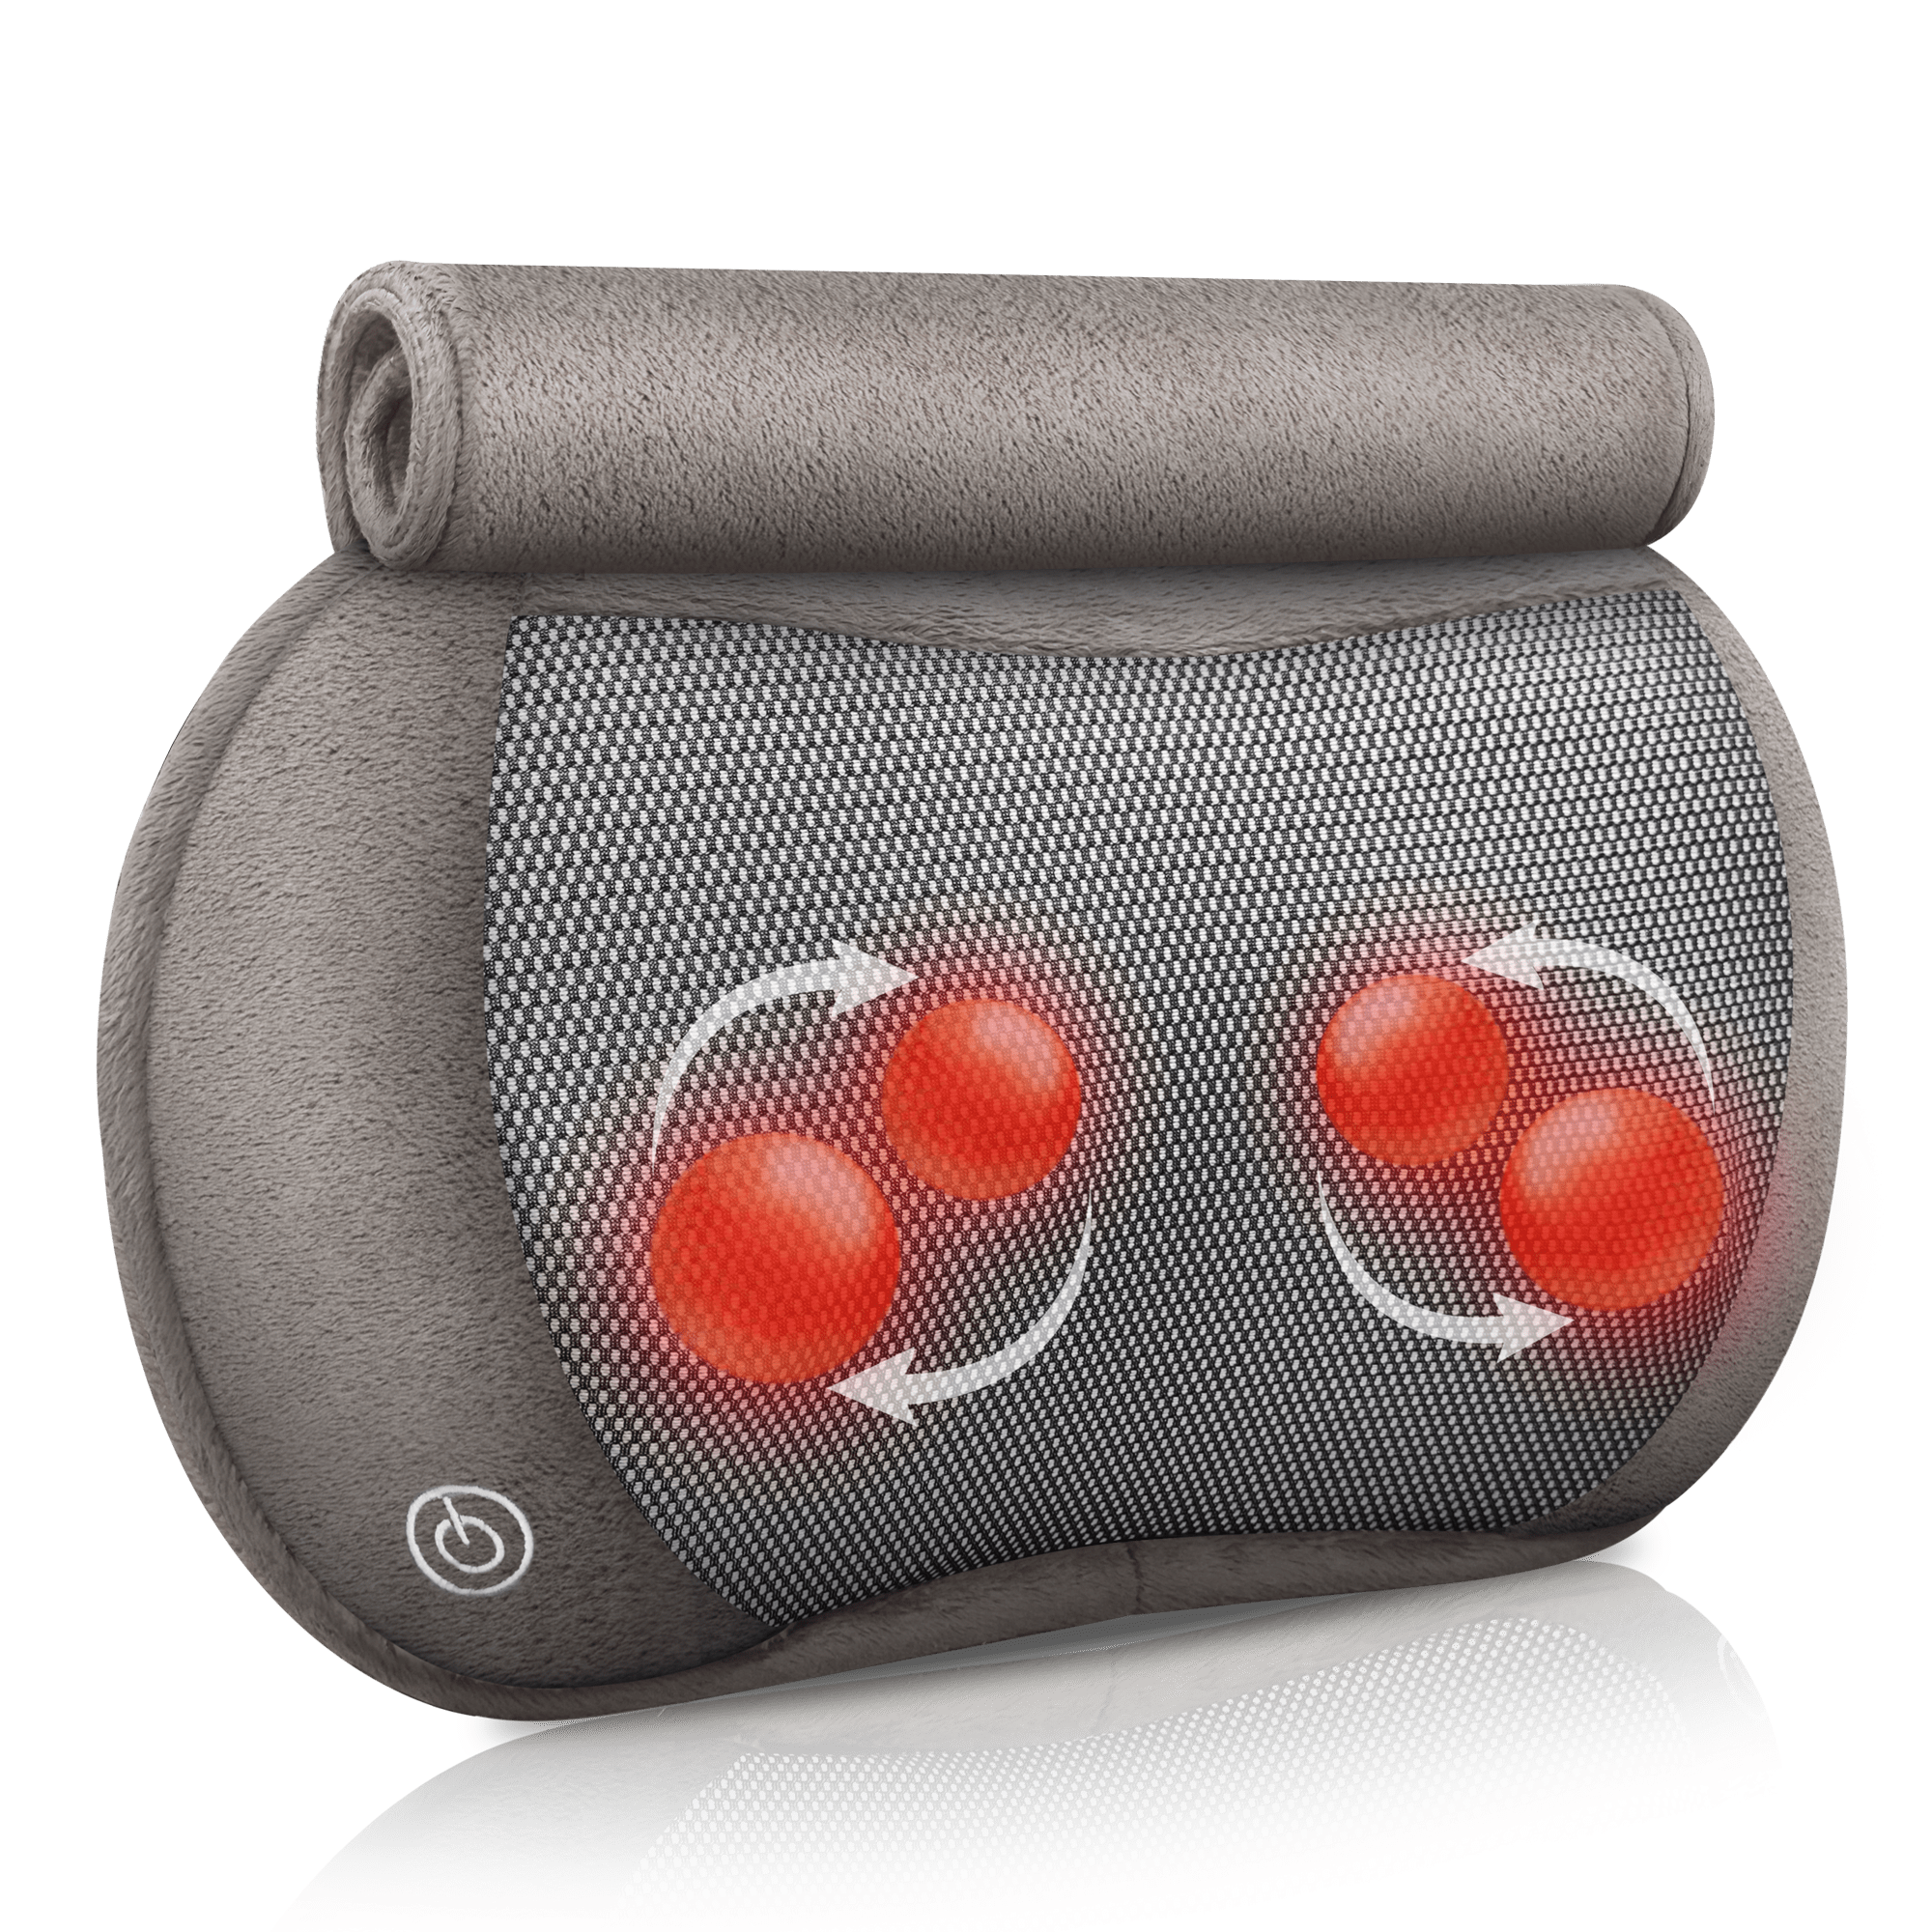 Zyllion Shiatsu Pillow Massager Review: Ease Your Broken Body